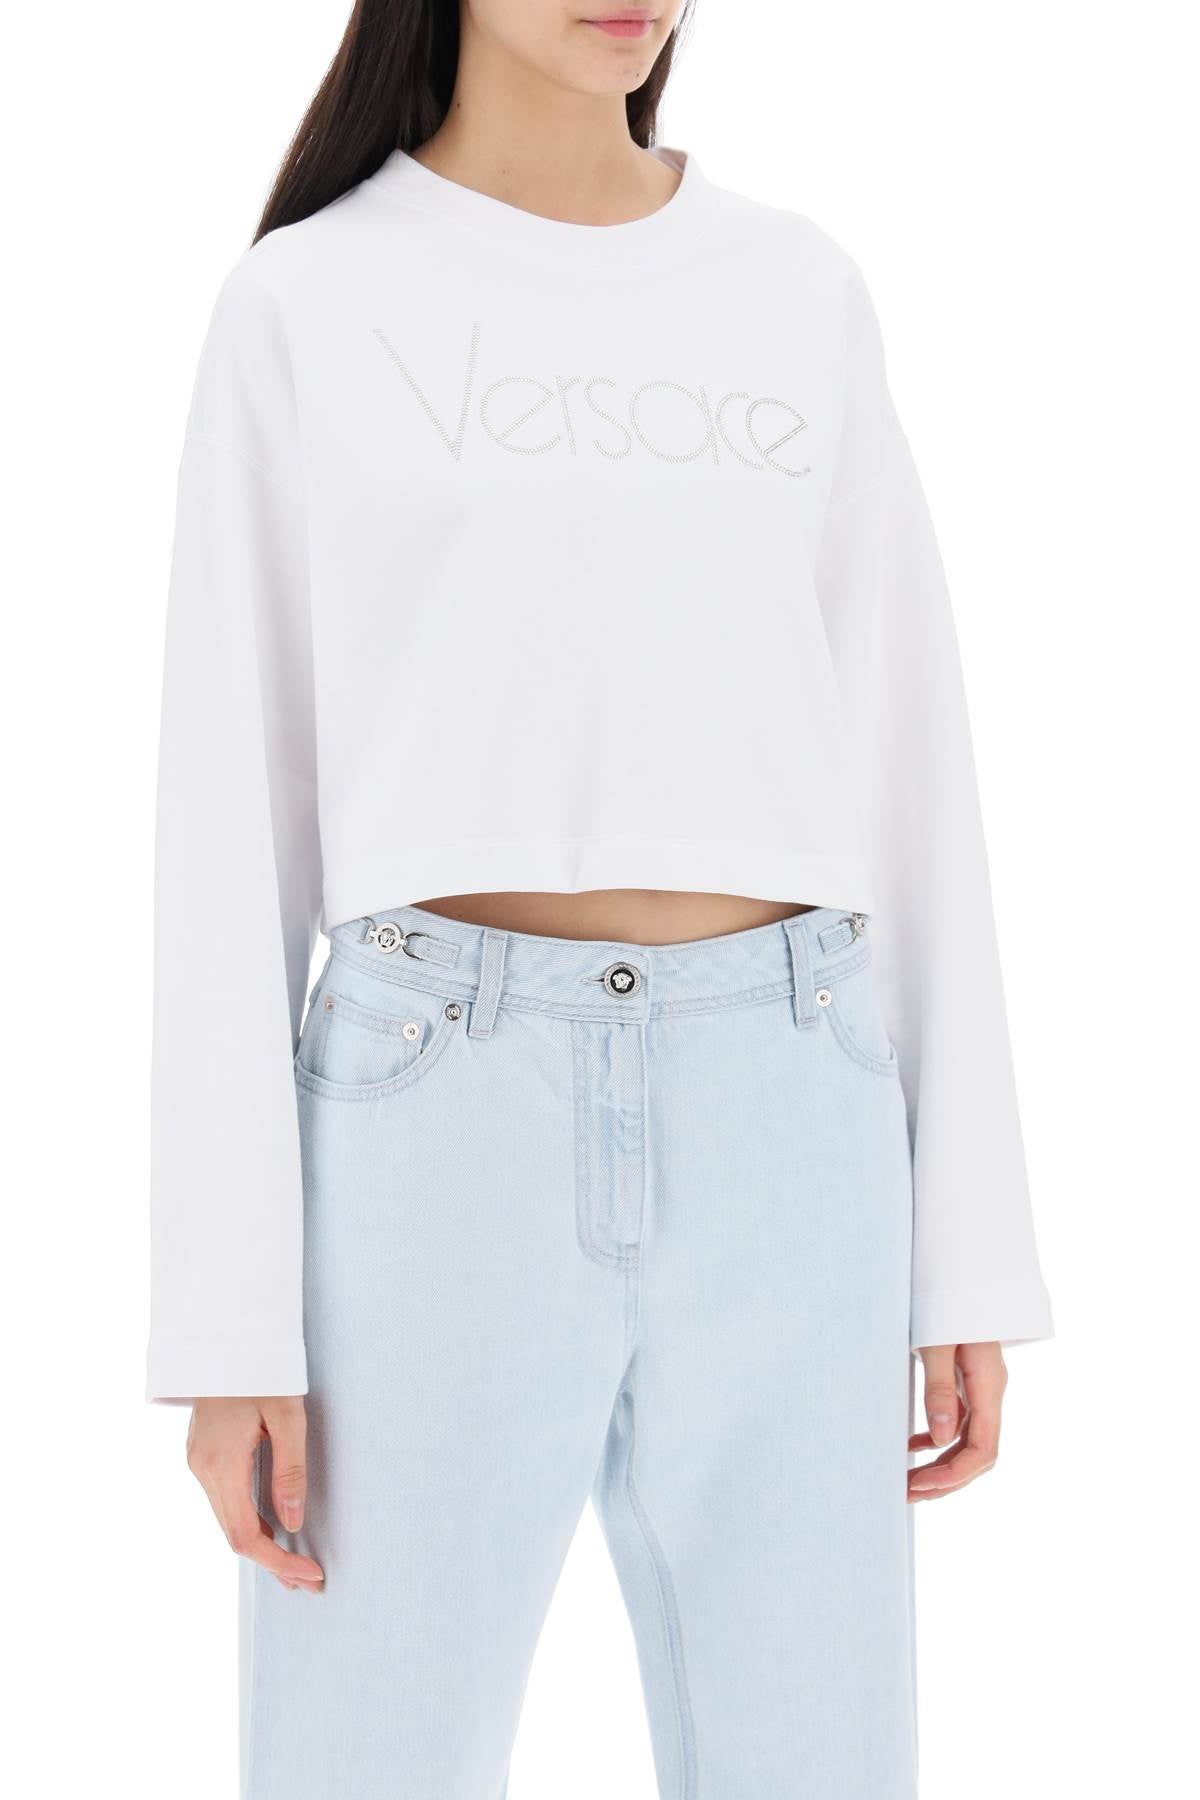 Versace "cropped sweatshirt with rhinestone-1